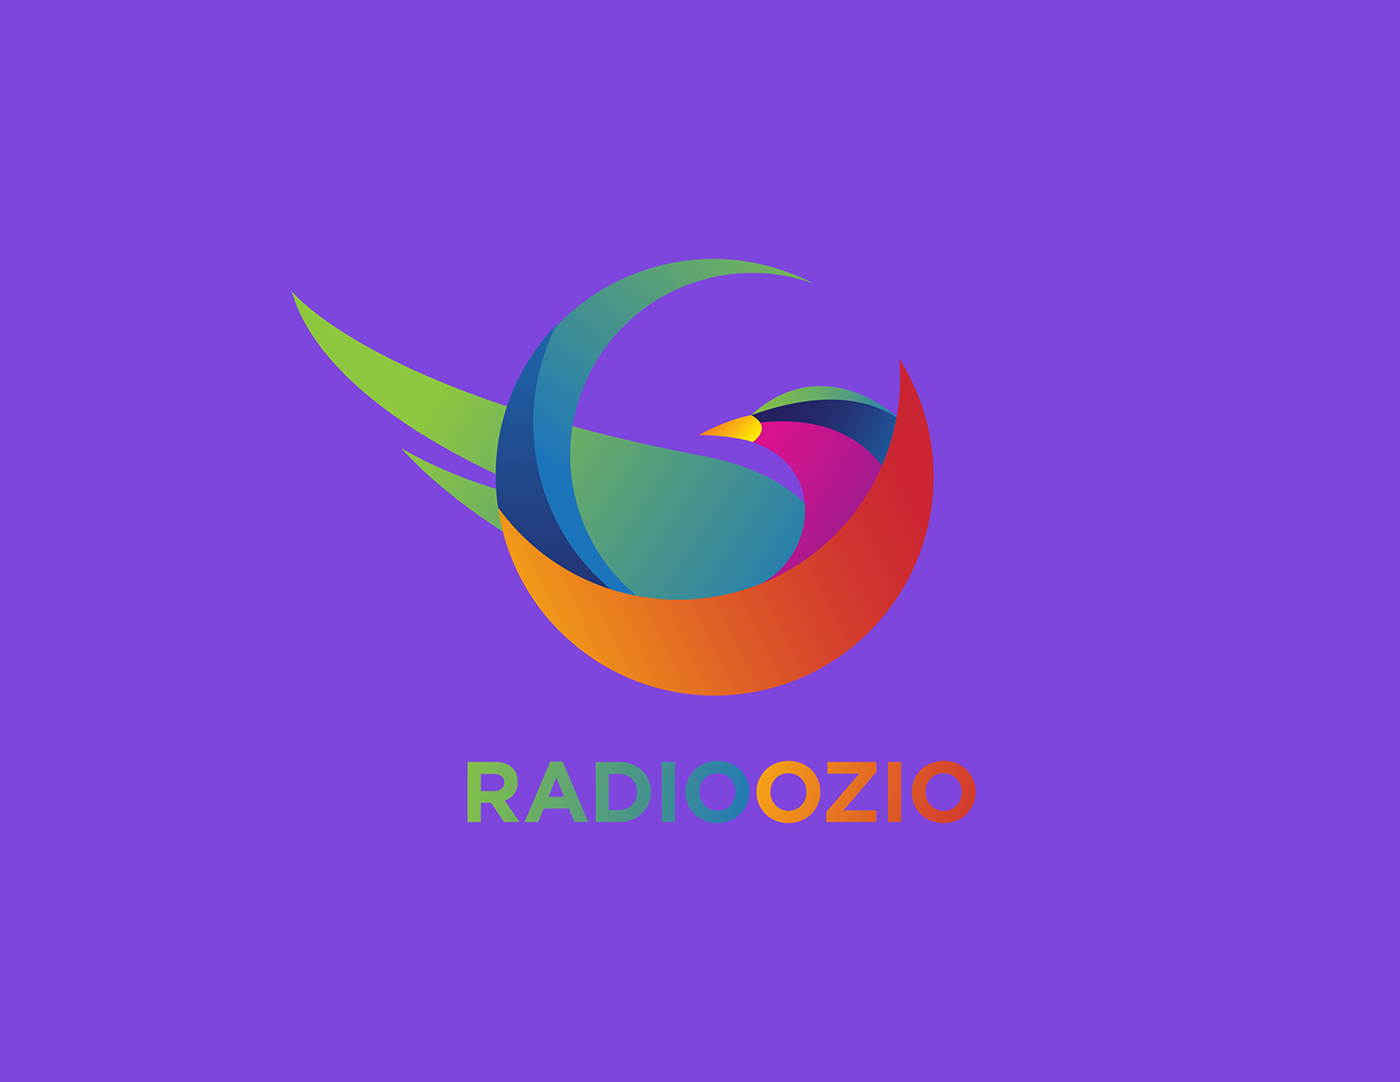 oiseaux bird logo colors design Radio